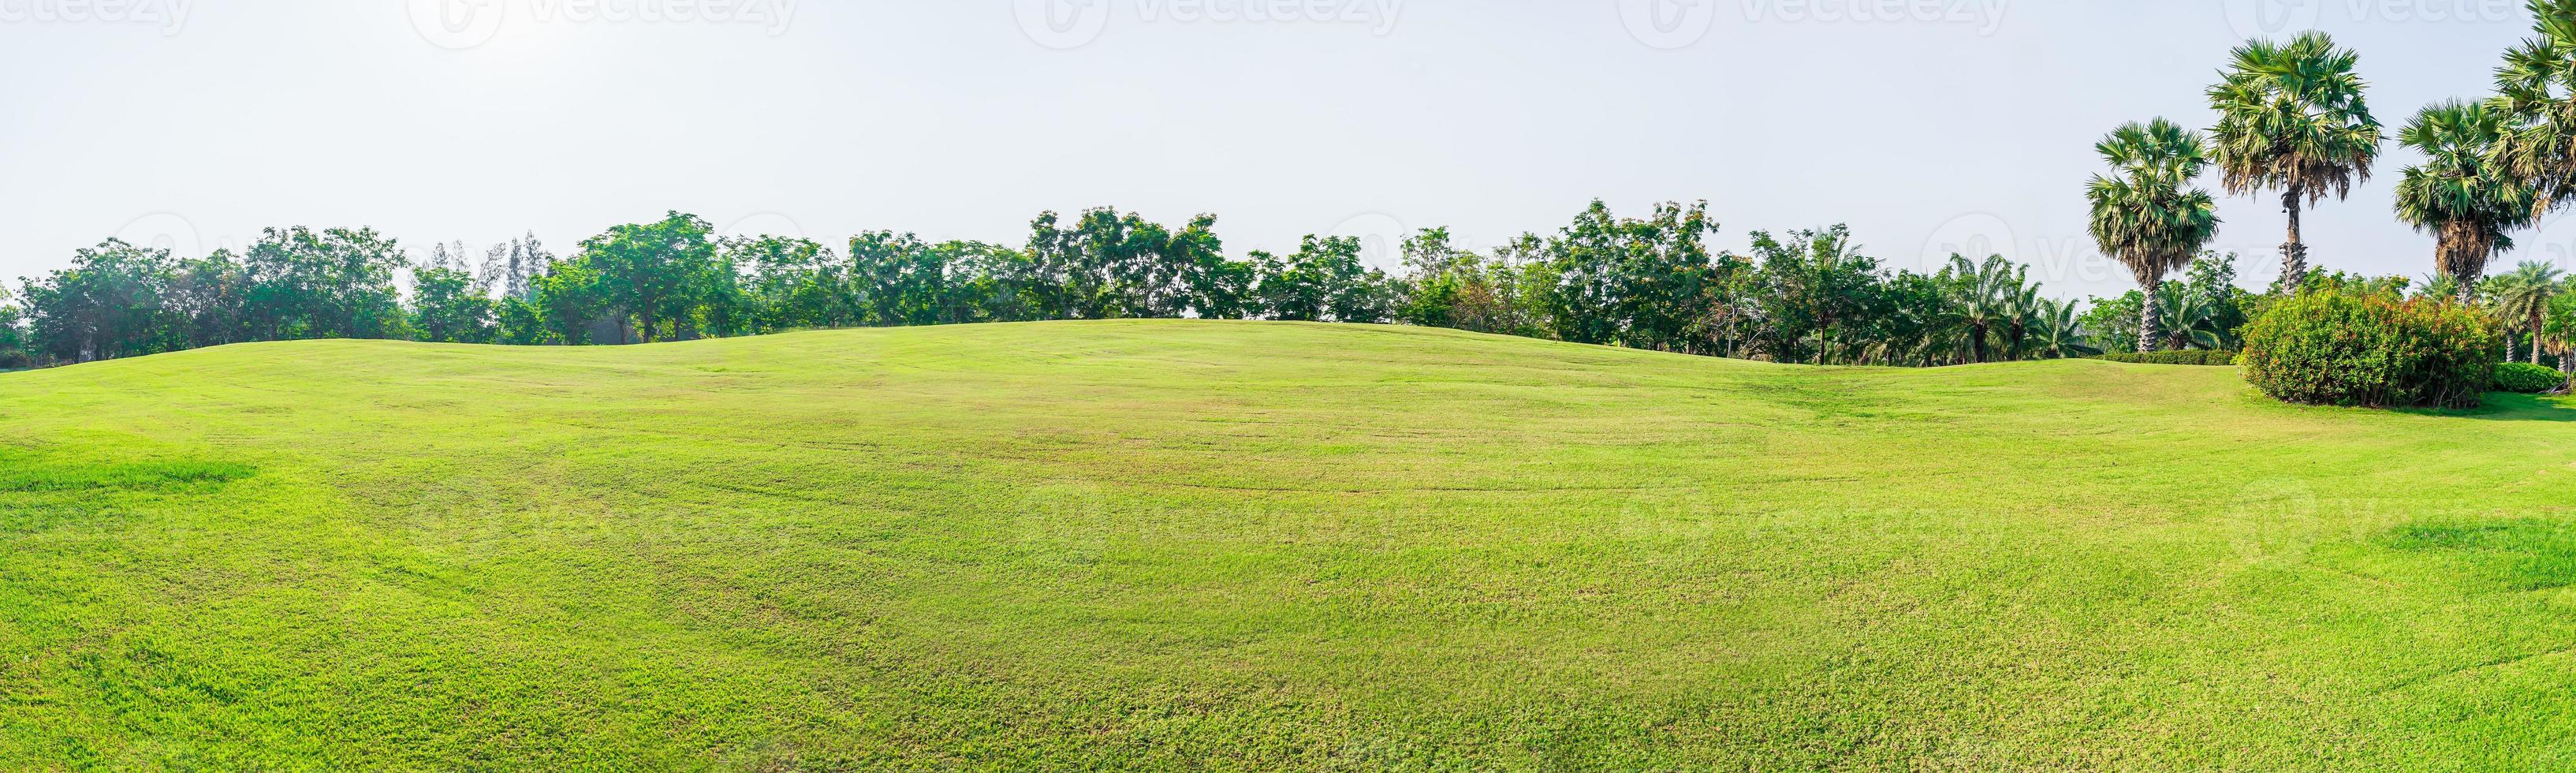 Panorama green grass on golf field photo